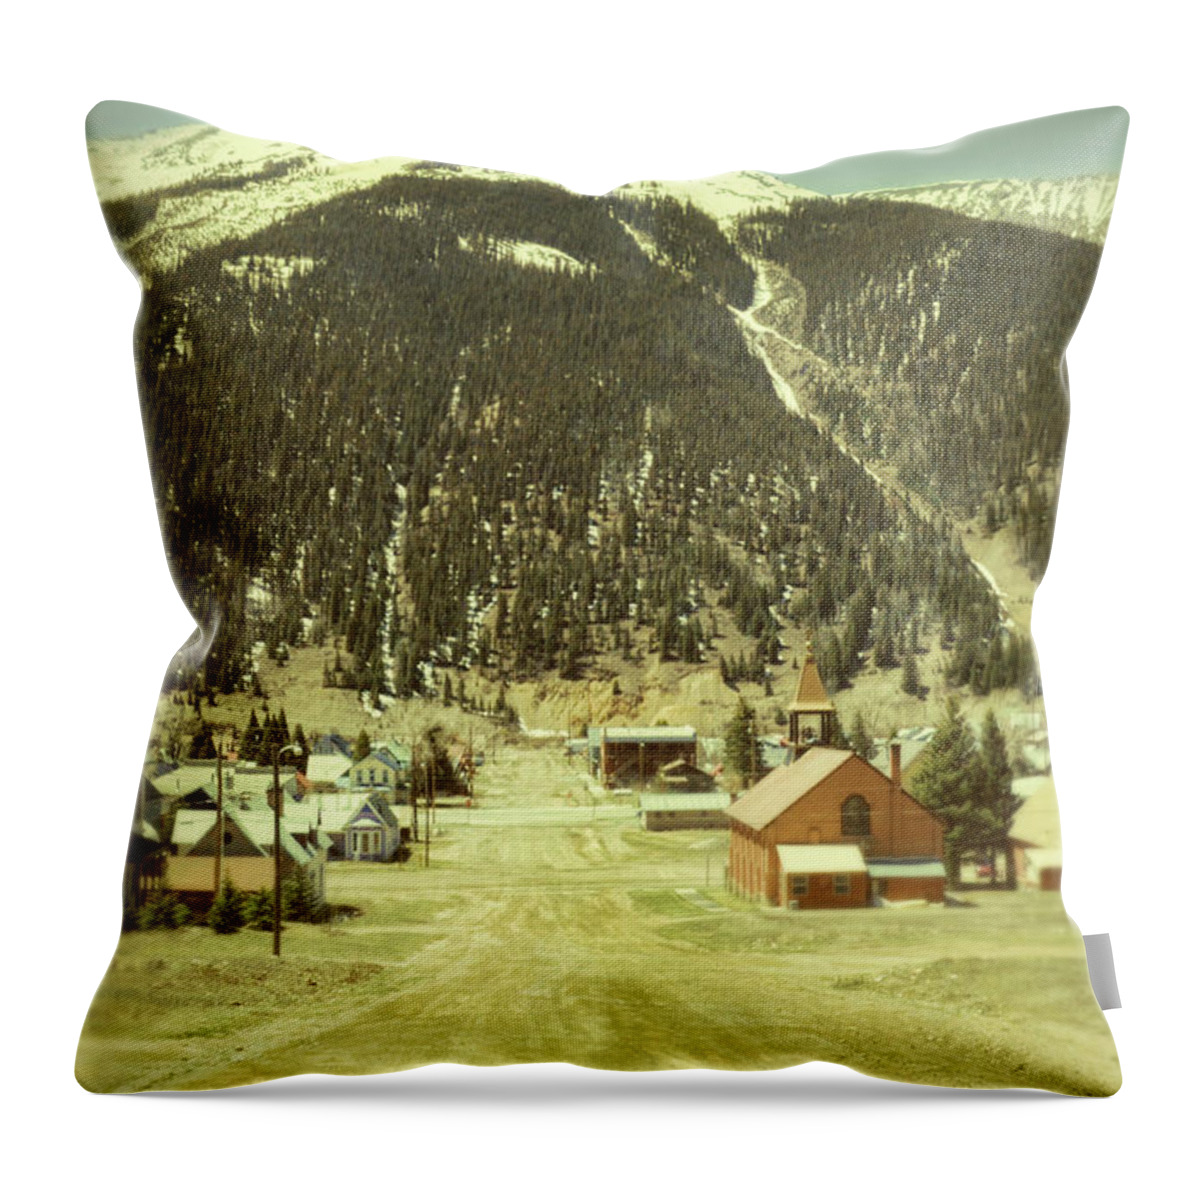 Mountains Throw Pillow featuring the photograph Small Rocky Mountain Town by Jill Battaglia